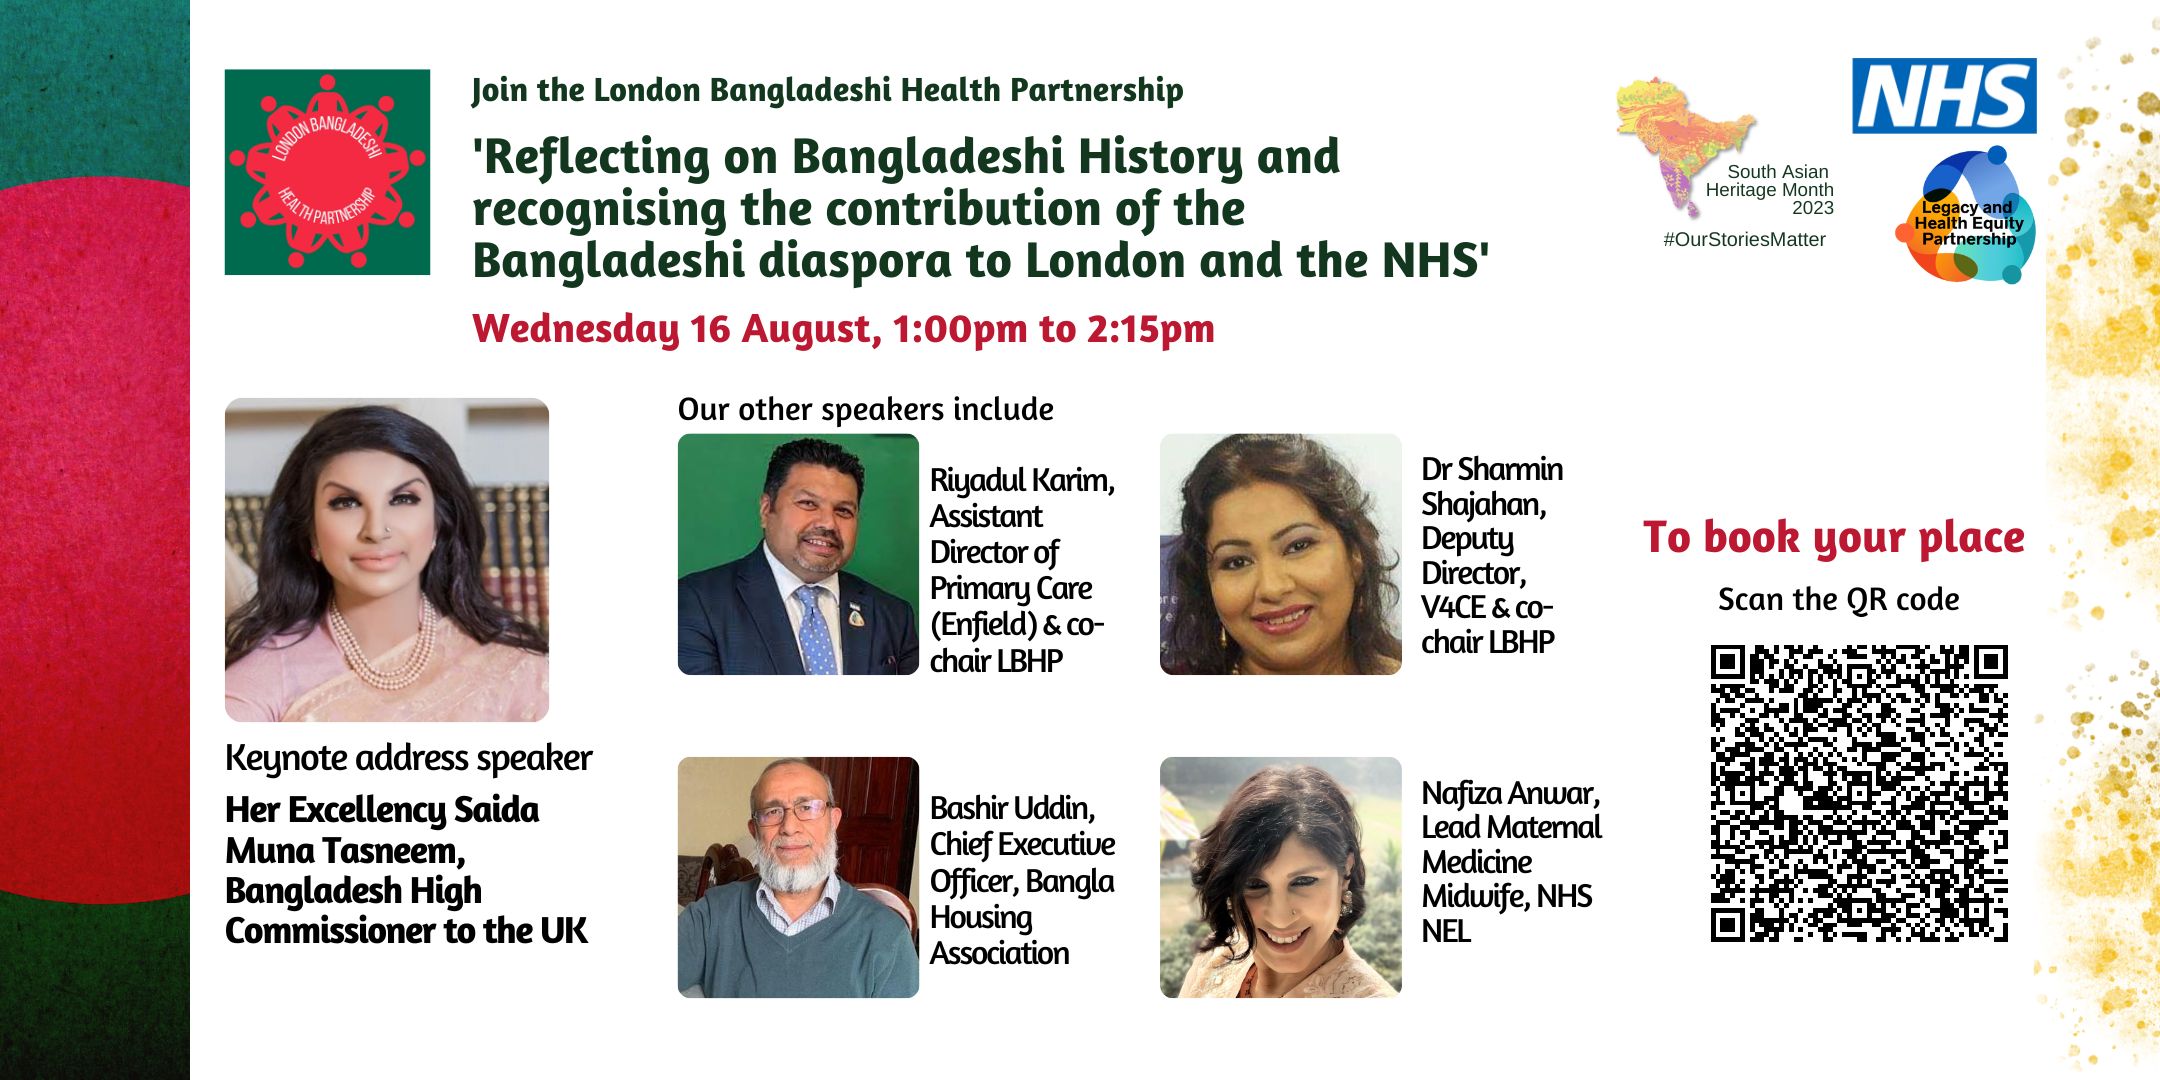 Promotional poster for the London Bangladeshi Health Partnership's webinar.